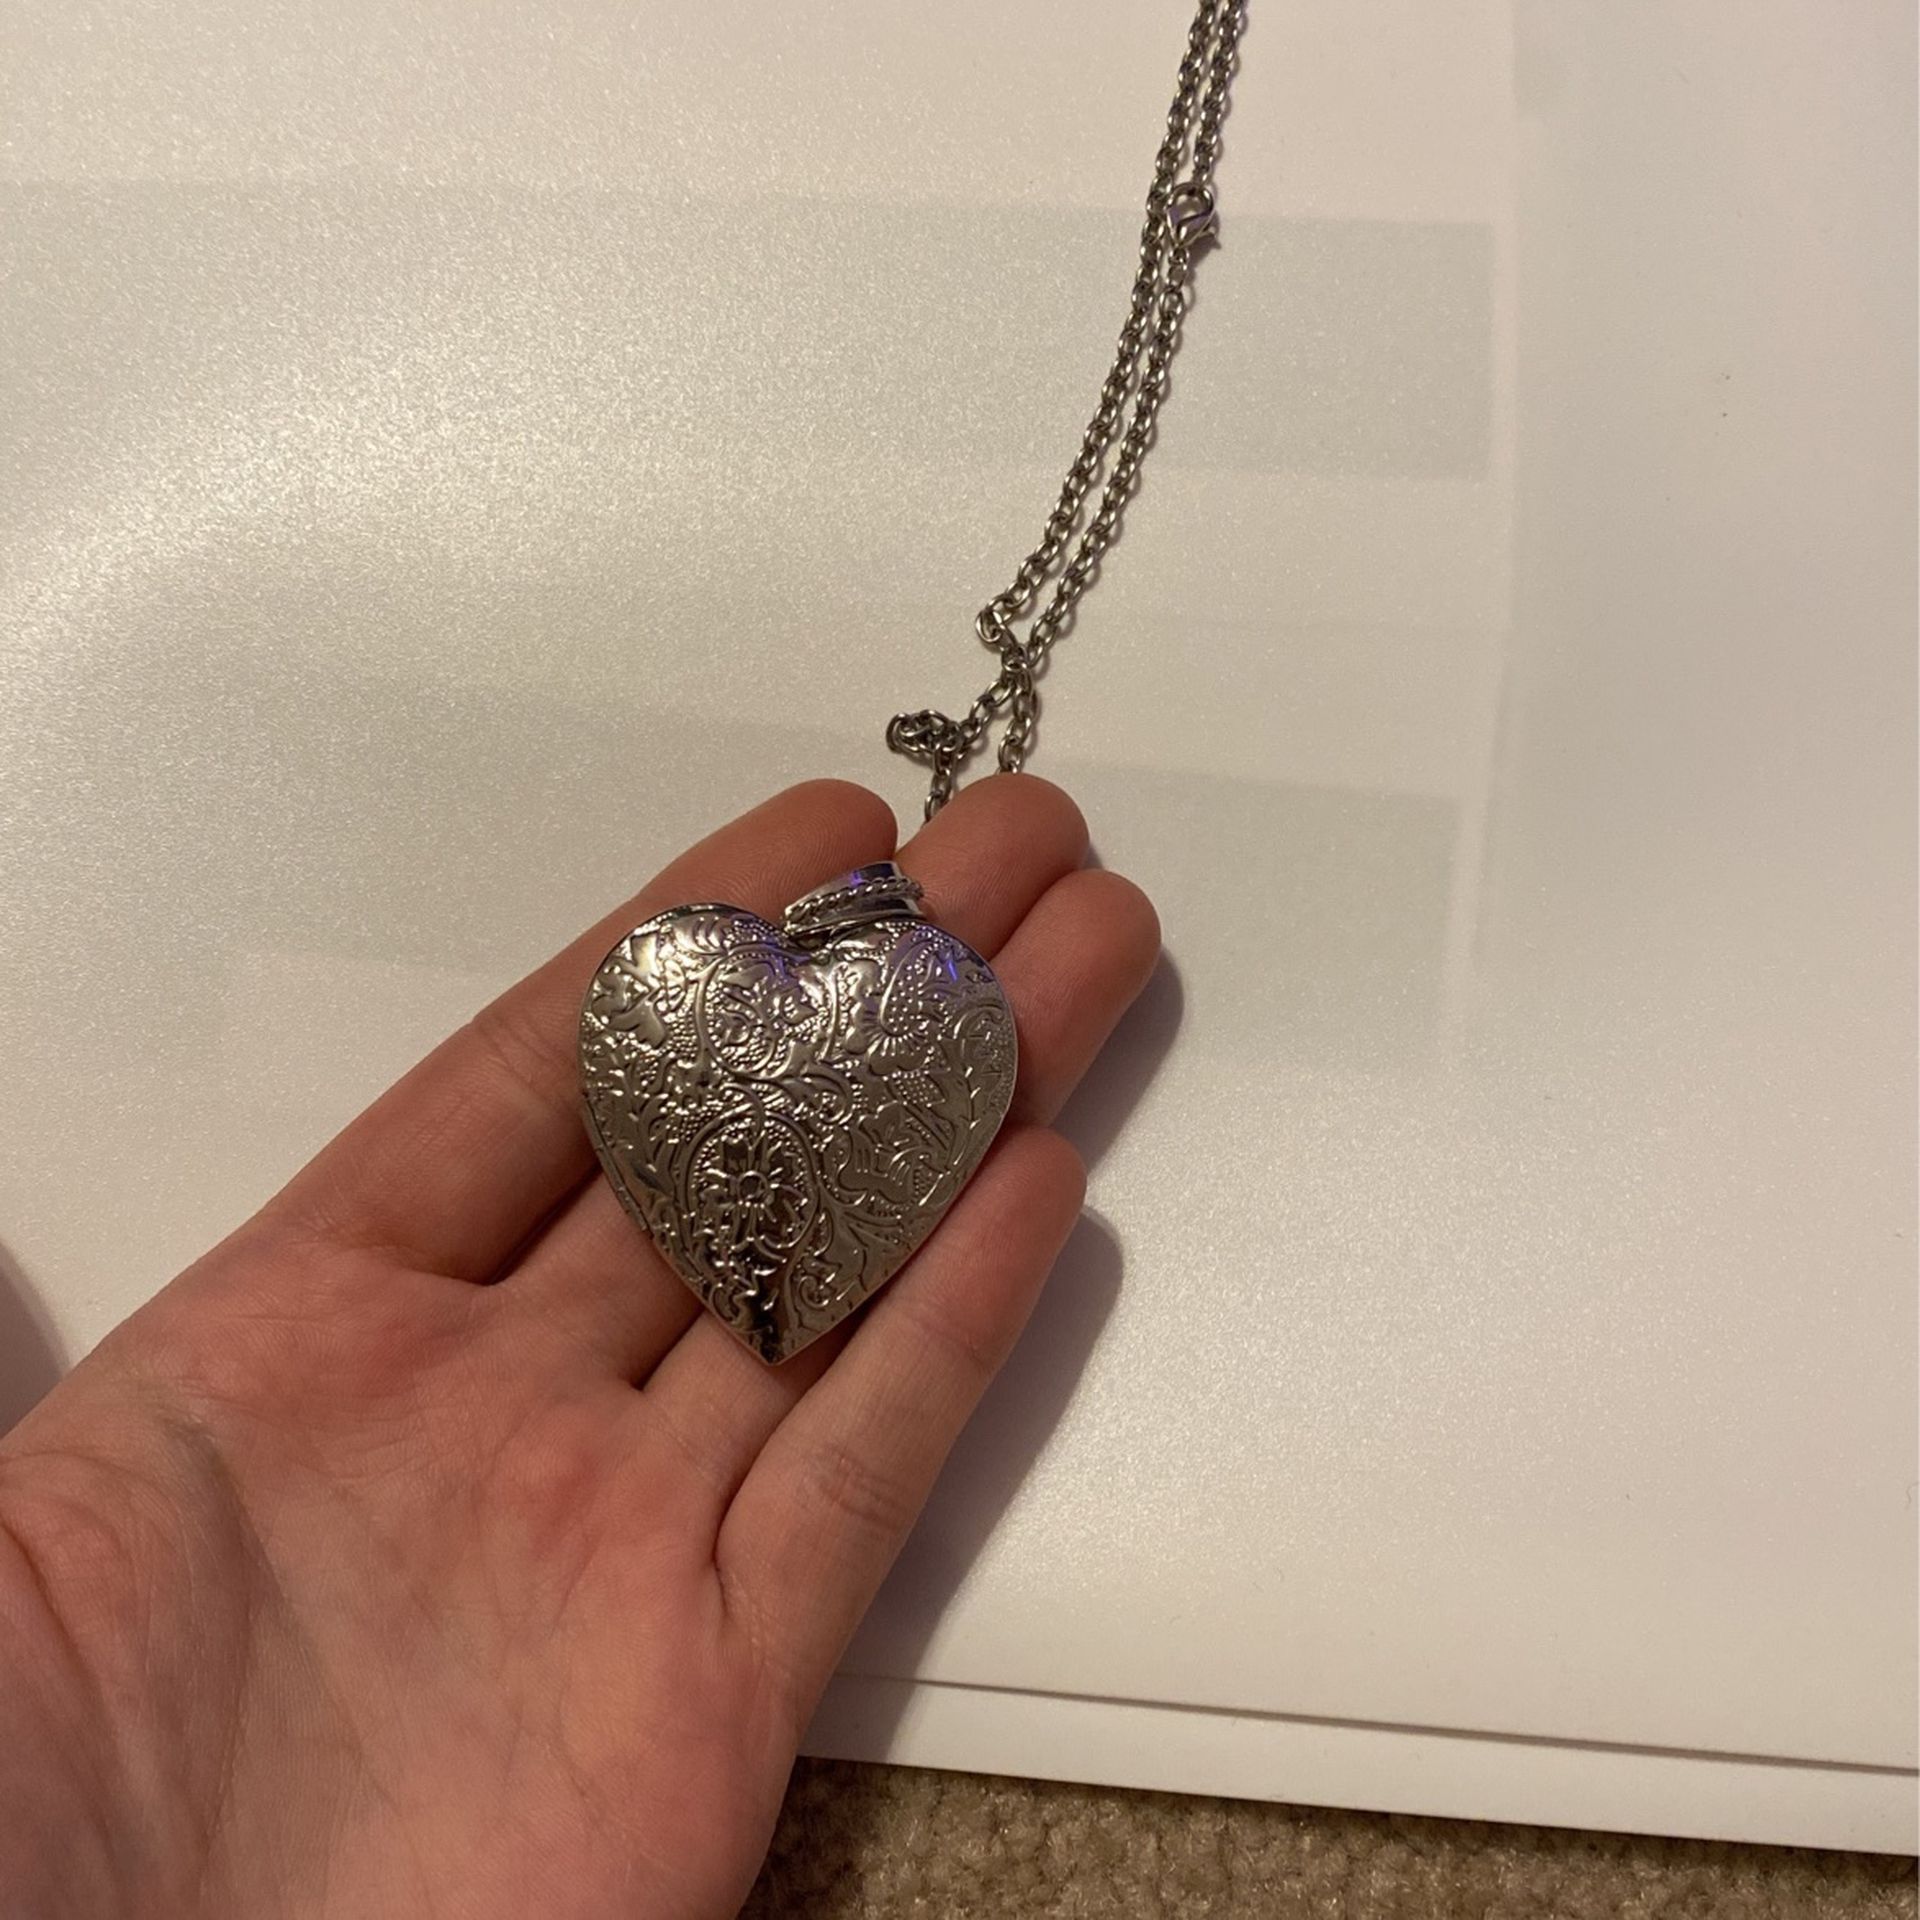 Large Heart Locket Necklace